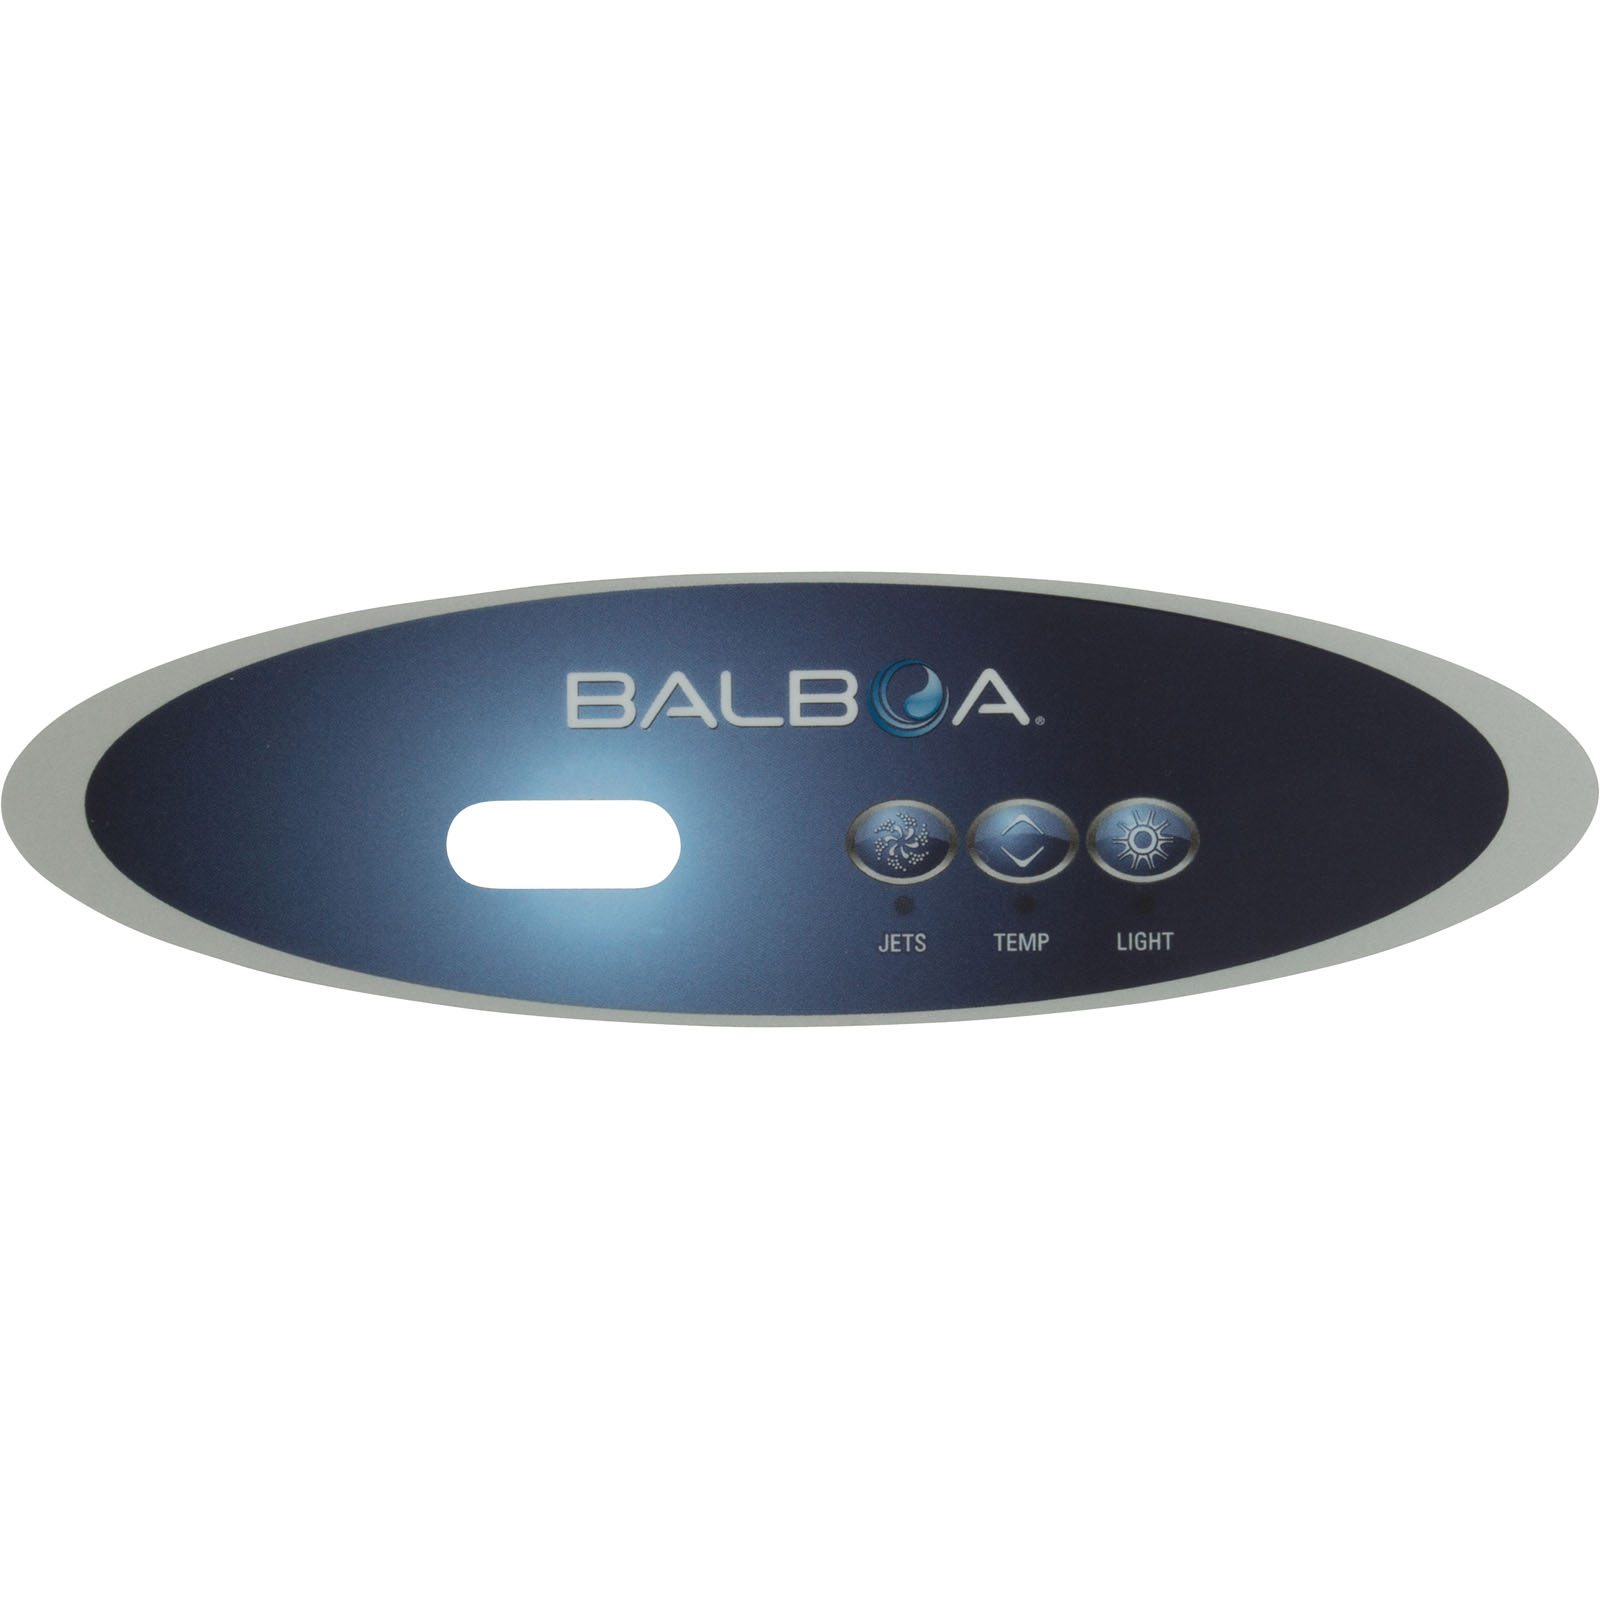 Balboa Water Group Overlay, Balboa Water Group MVP260/VL260, Jet/Temp/Light